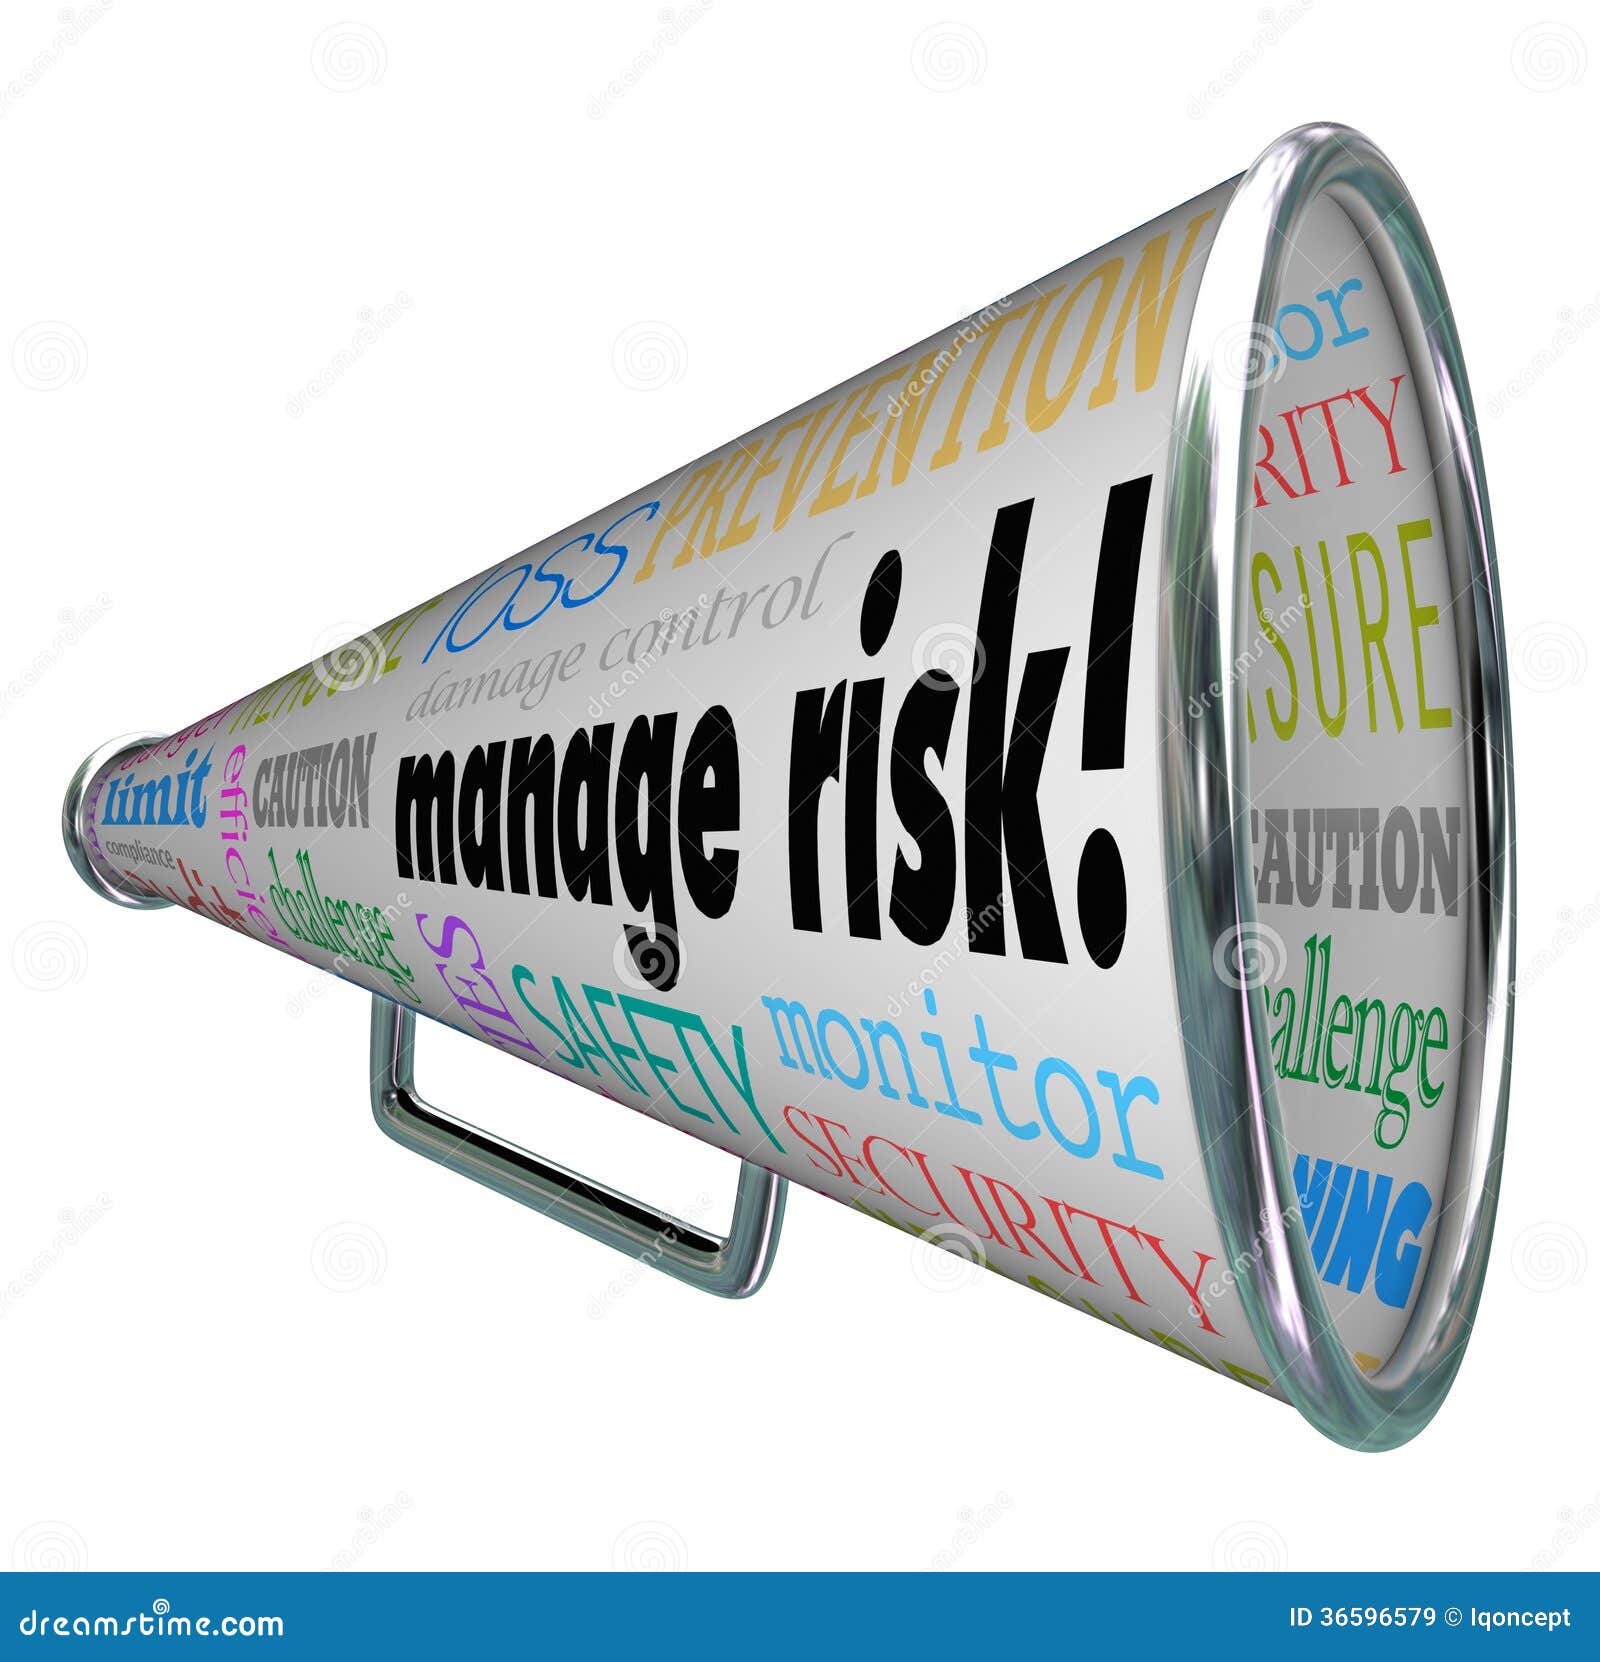 manage risk bullhorn megaphone limit loss liability compliance